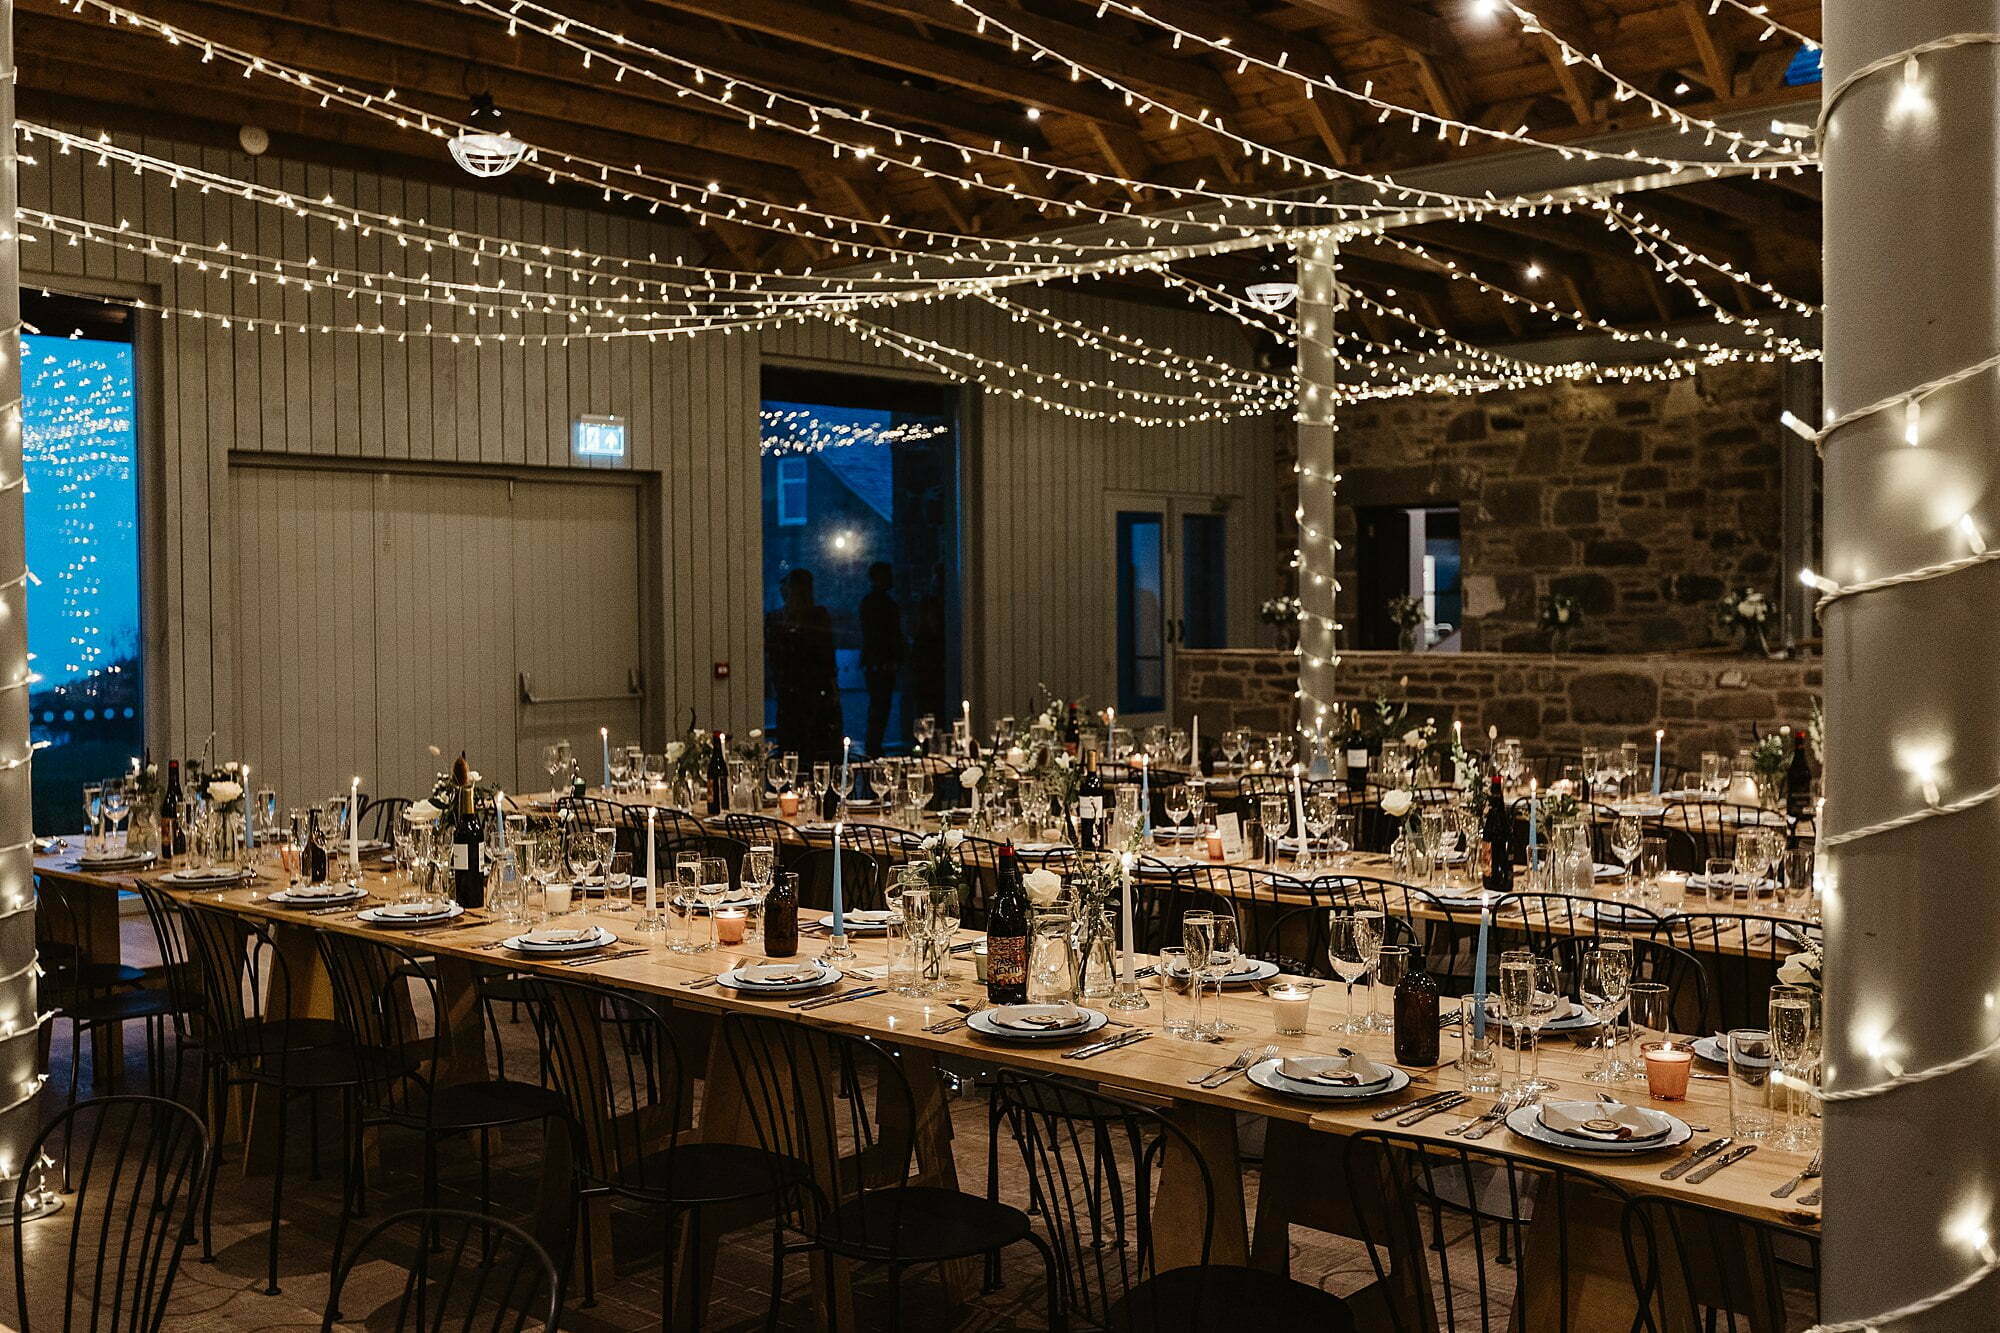 guardswell farm winter wedding dinner room table setting rustic fairy lights